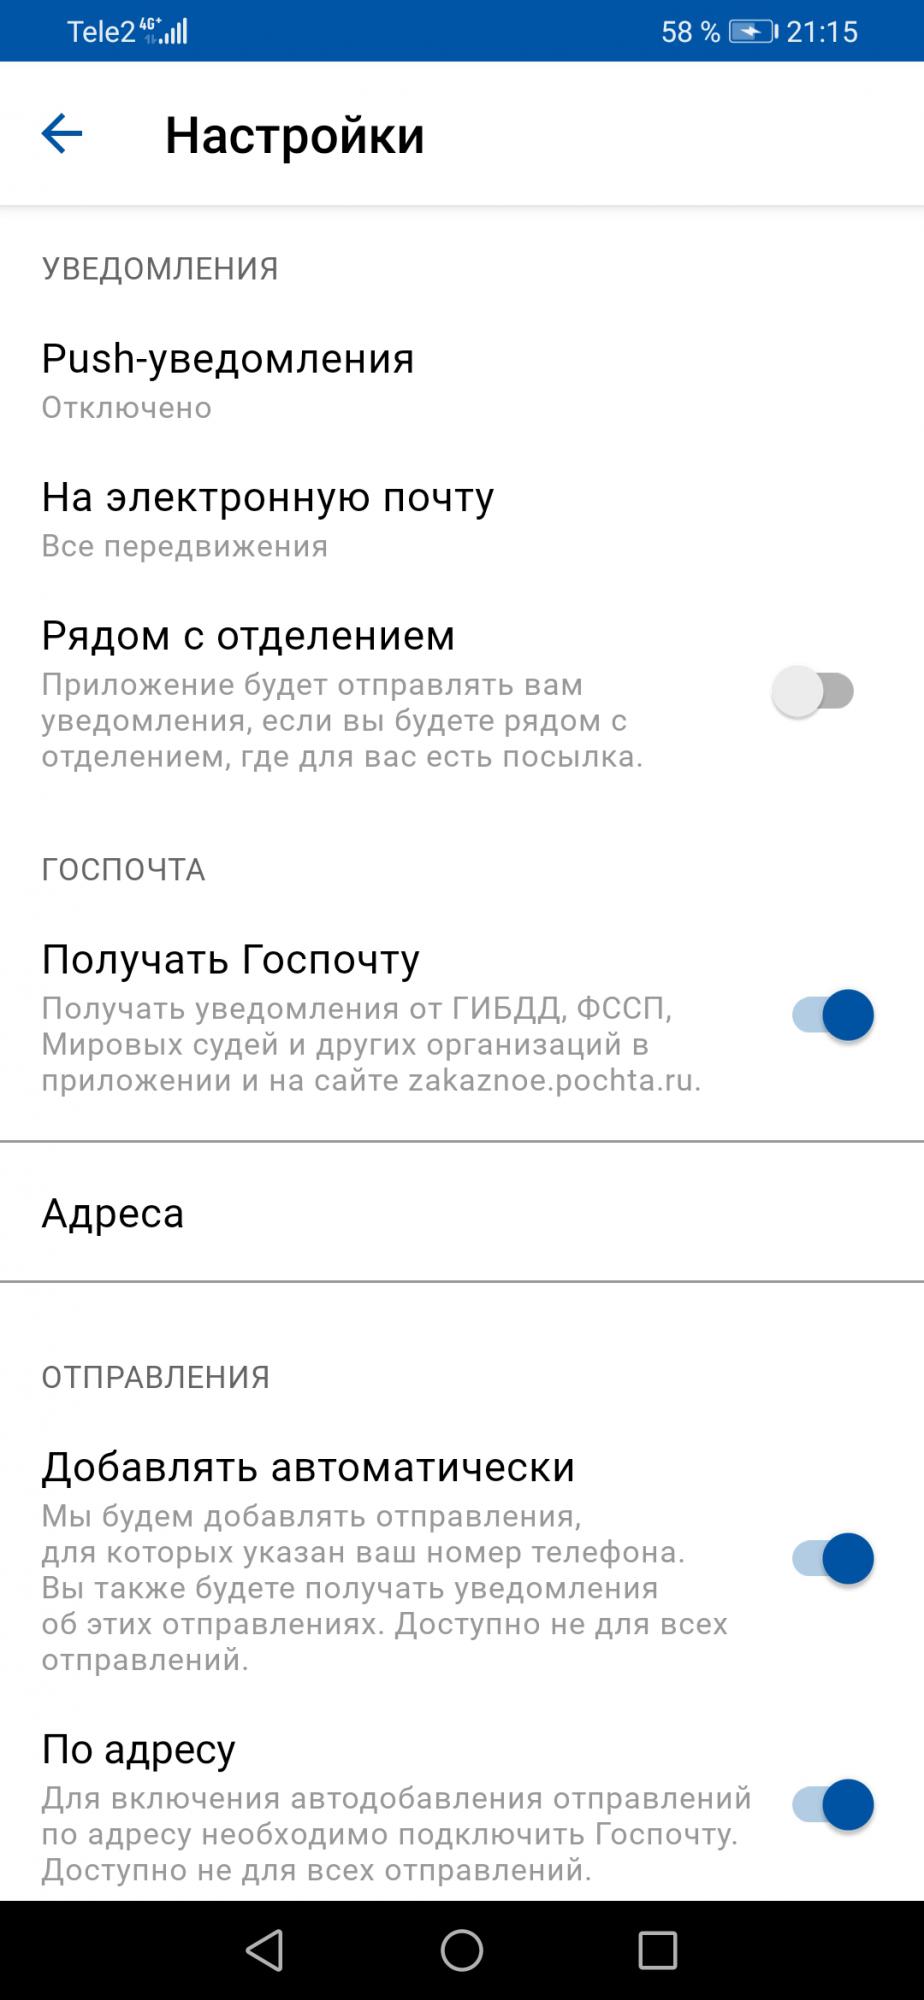 Screenshot_20210215_211546_com.octopod.russianpost.client.android.jpg